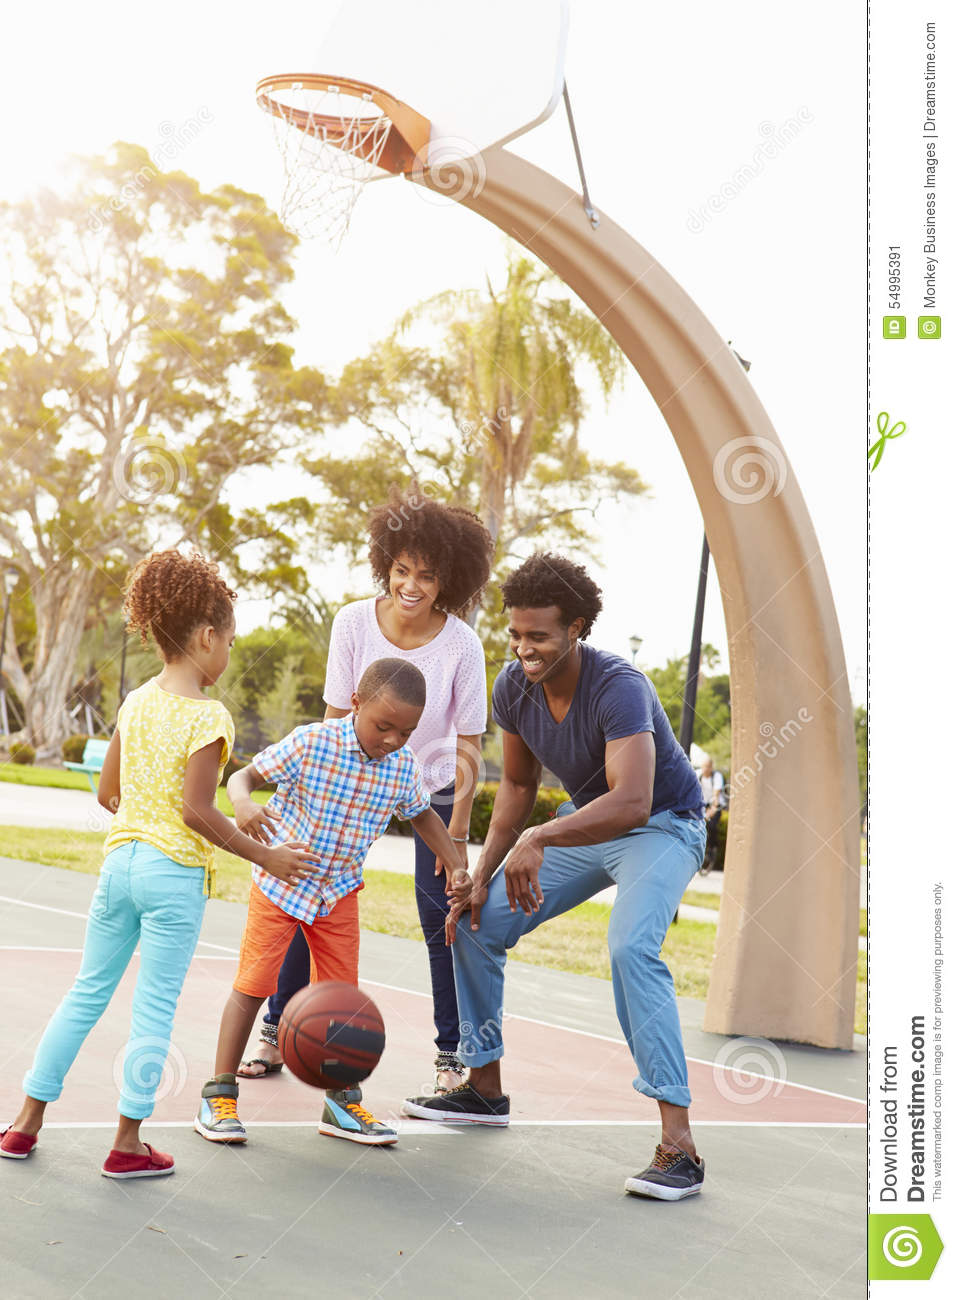 Family Playing Basketball Together Stock Photo   Image  54995391